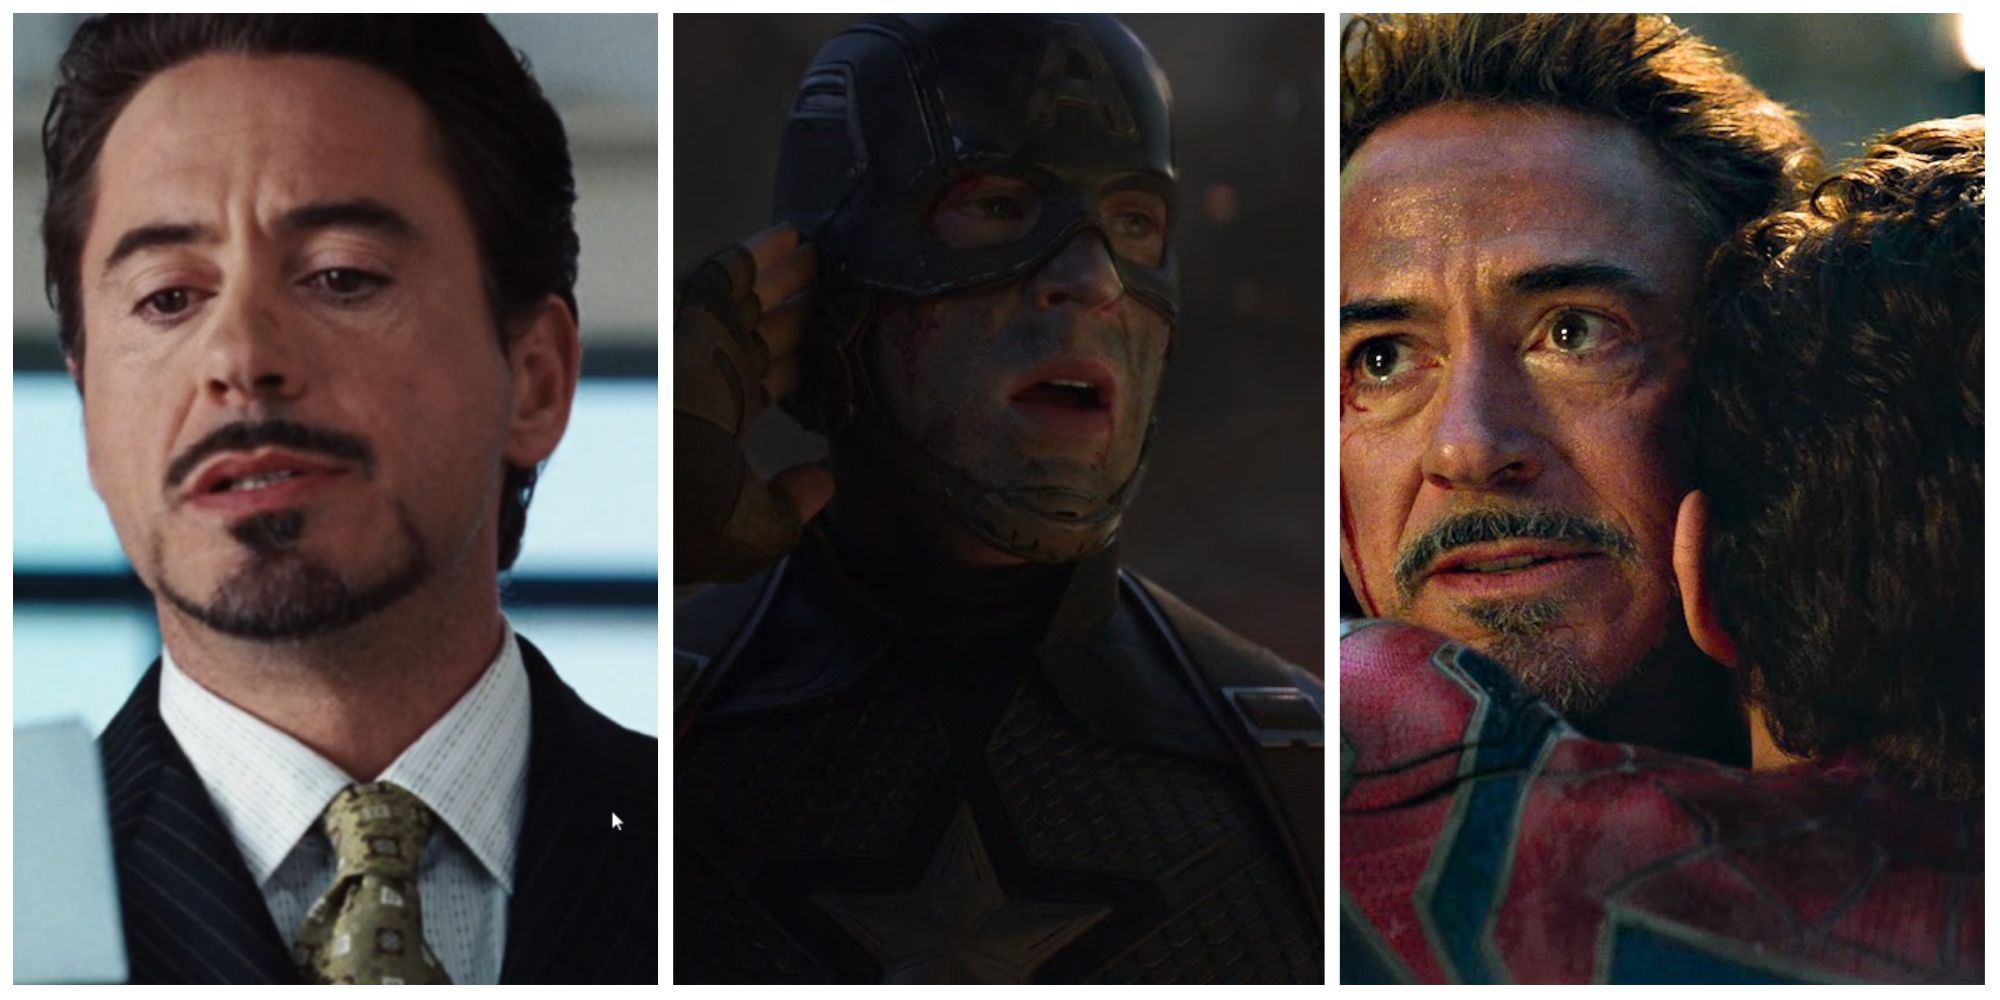 Roberty Downey Jr. as Tony Stark, Iron Man. Chris Evans as Steve Rogers, Captain America. Tom Holland as Peter Parker, Spider-Man.